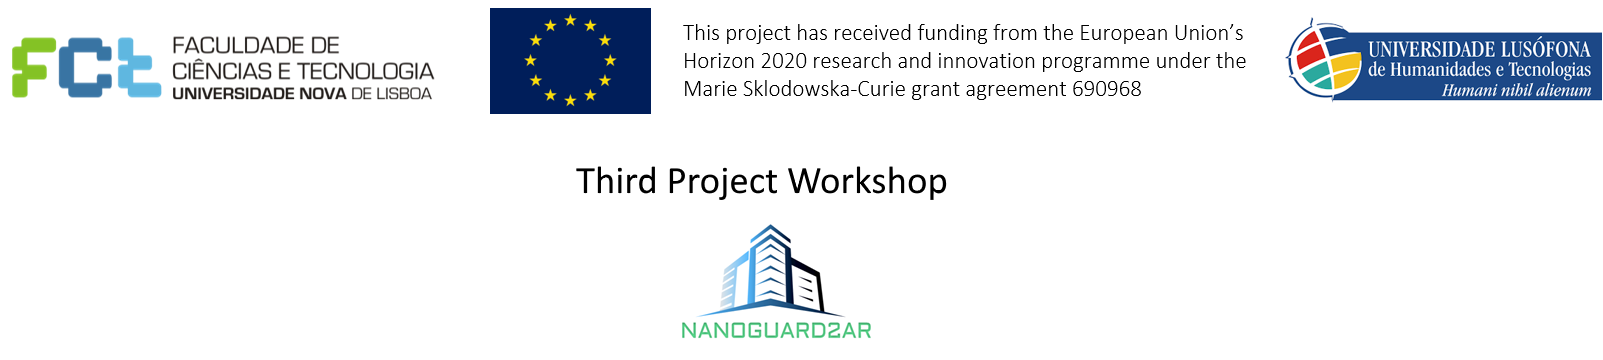 NANOGUARD2AR project workshop